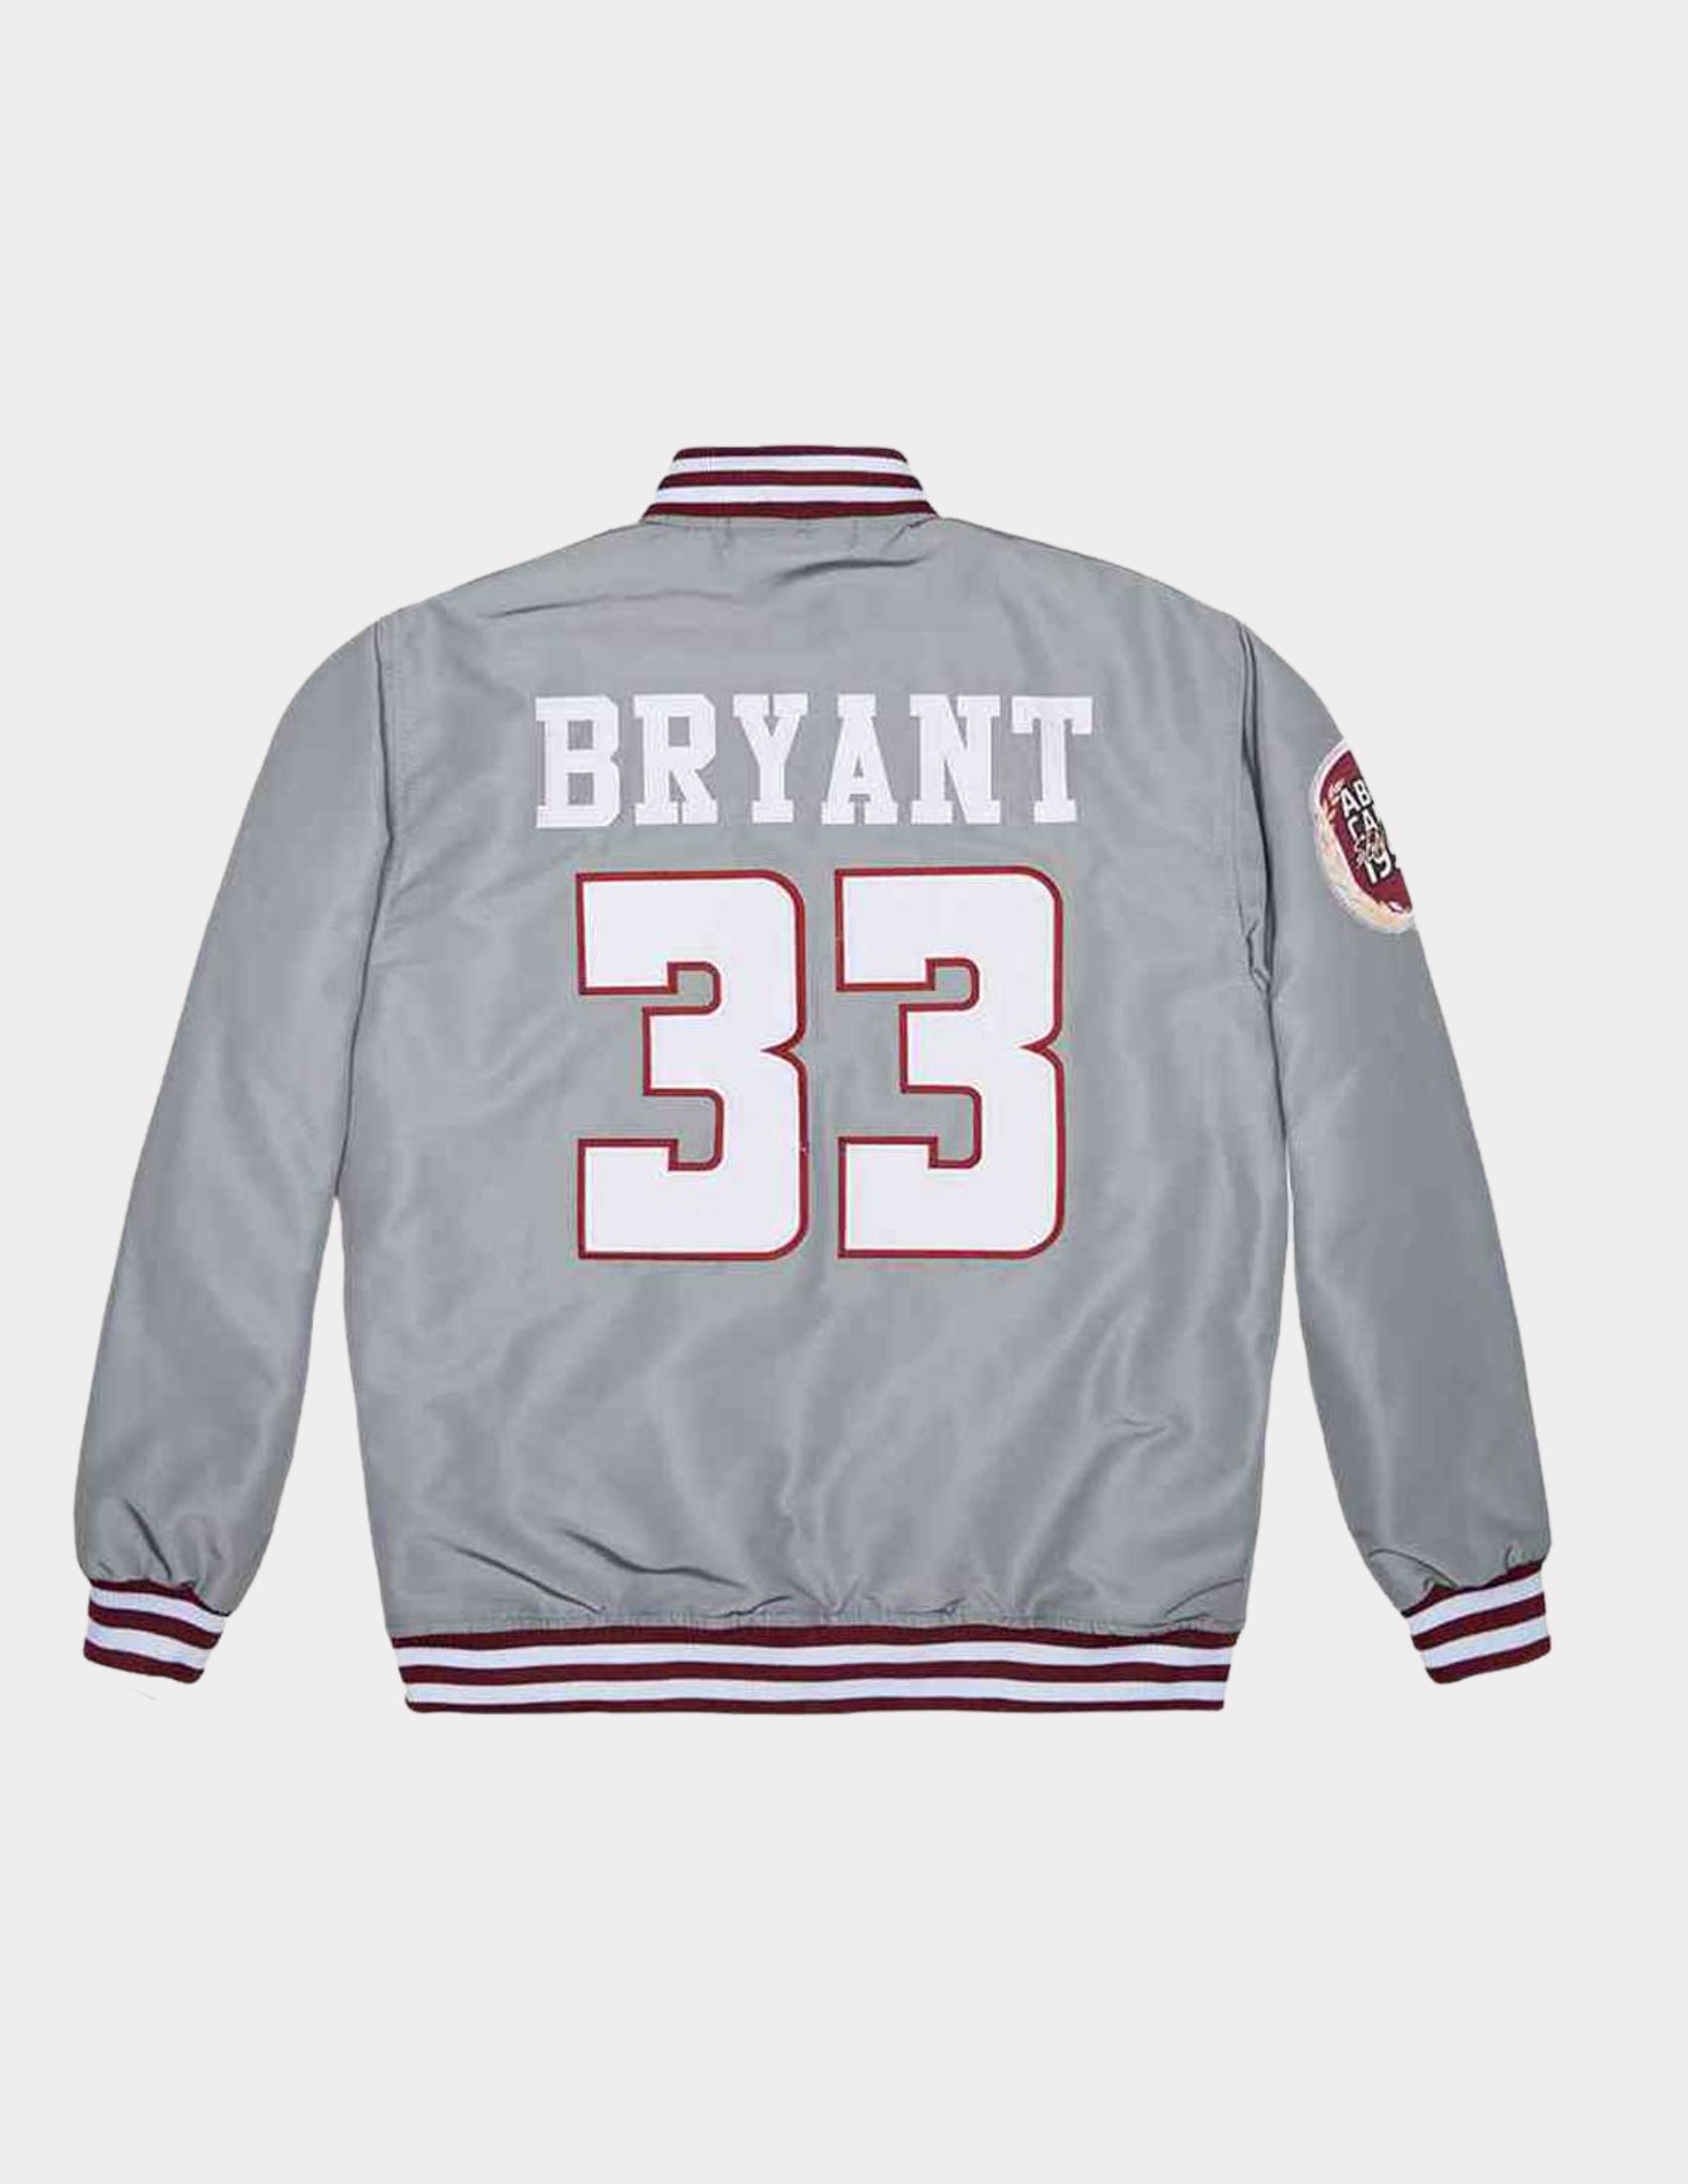 KOBE BRYANT McDonald's All American High School Basketball Jersey Stitched  NEW